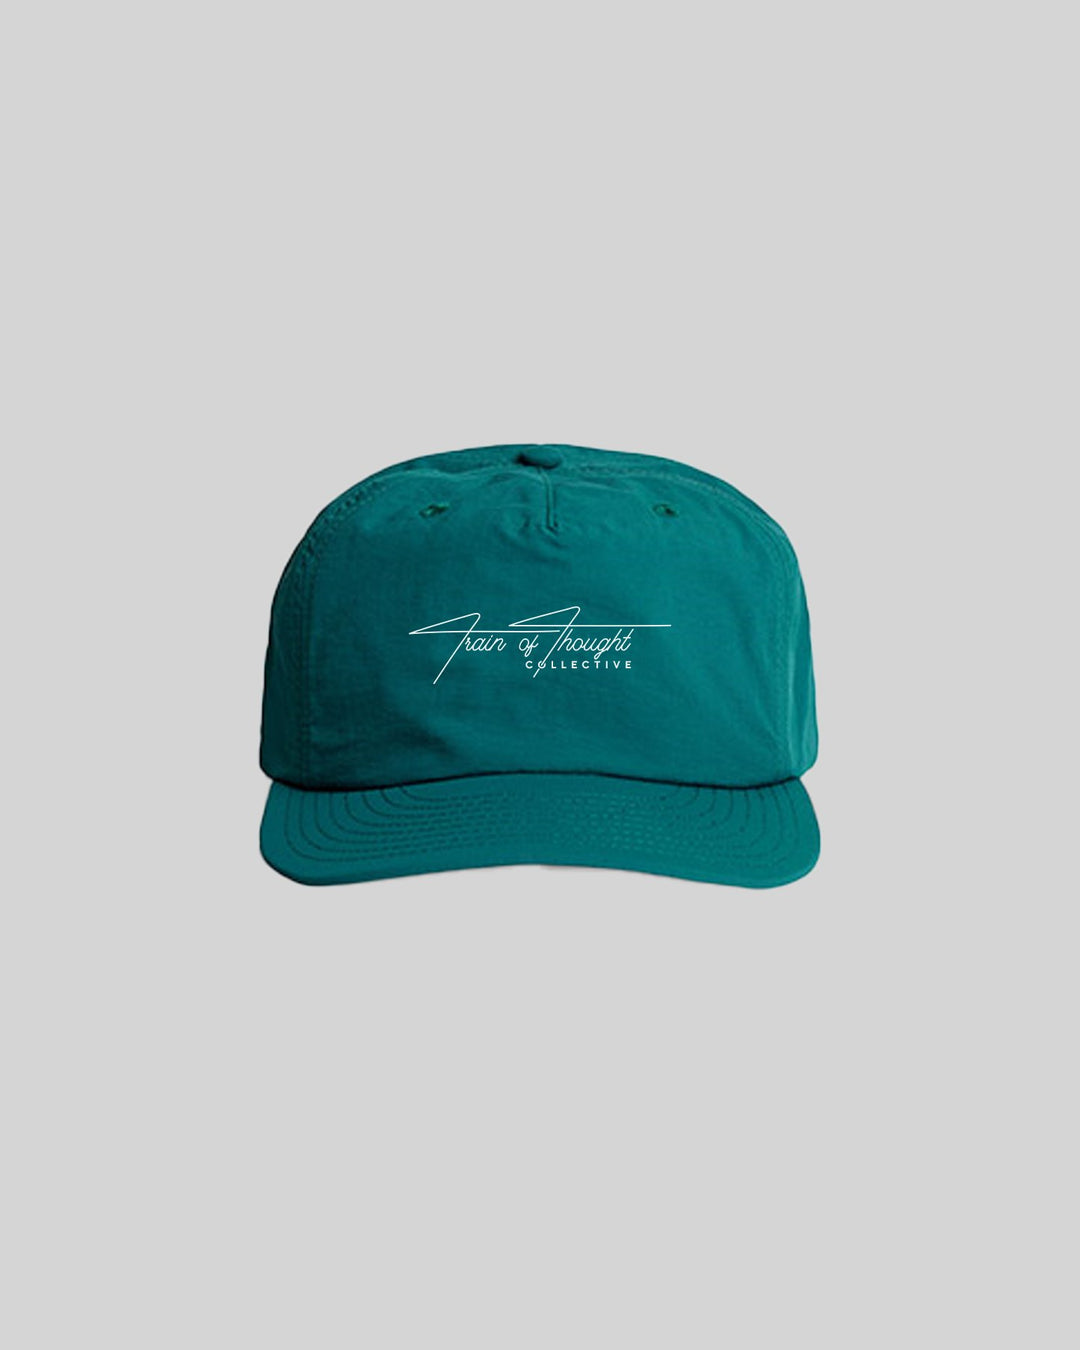 TOTC Signature Surf Turquoise Snapback - trainofthoughtcollective